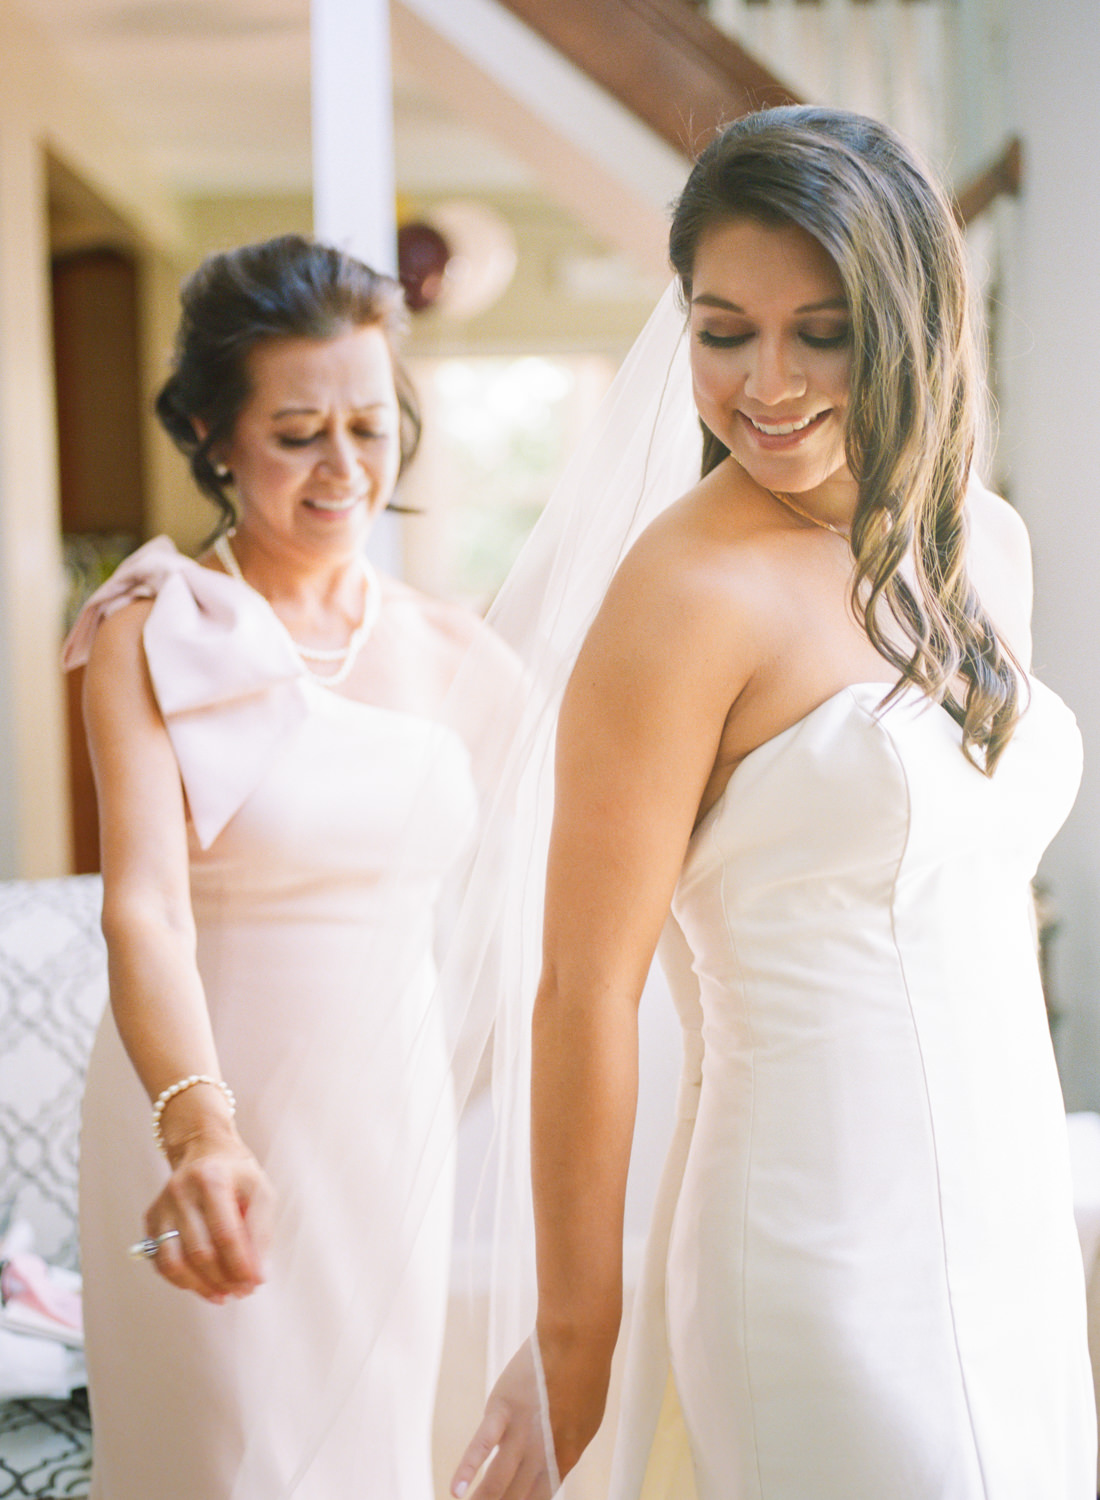 Mom helping bride get ready; St. Louis fine art film wedding photographer Erica Robnett Photography